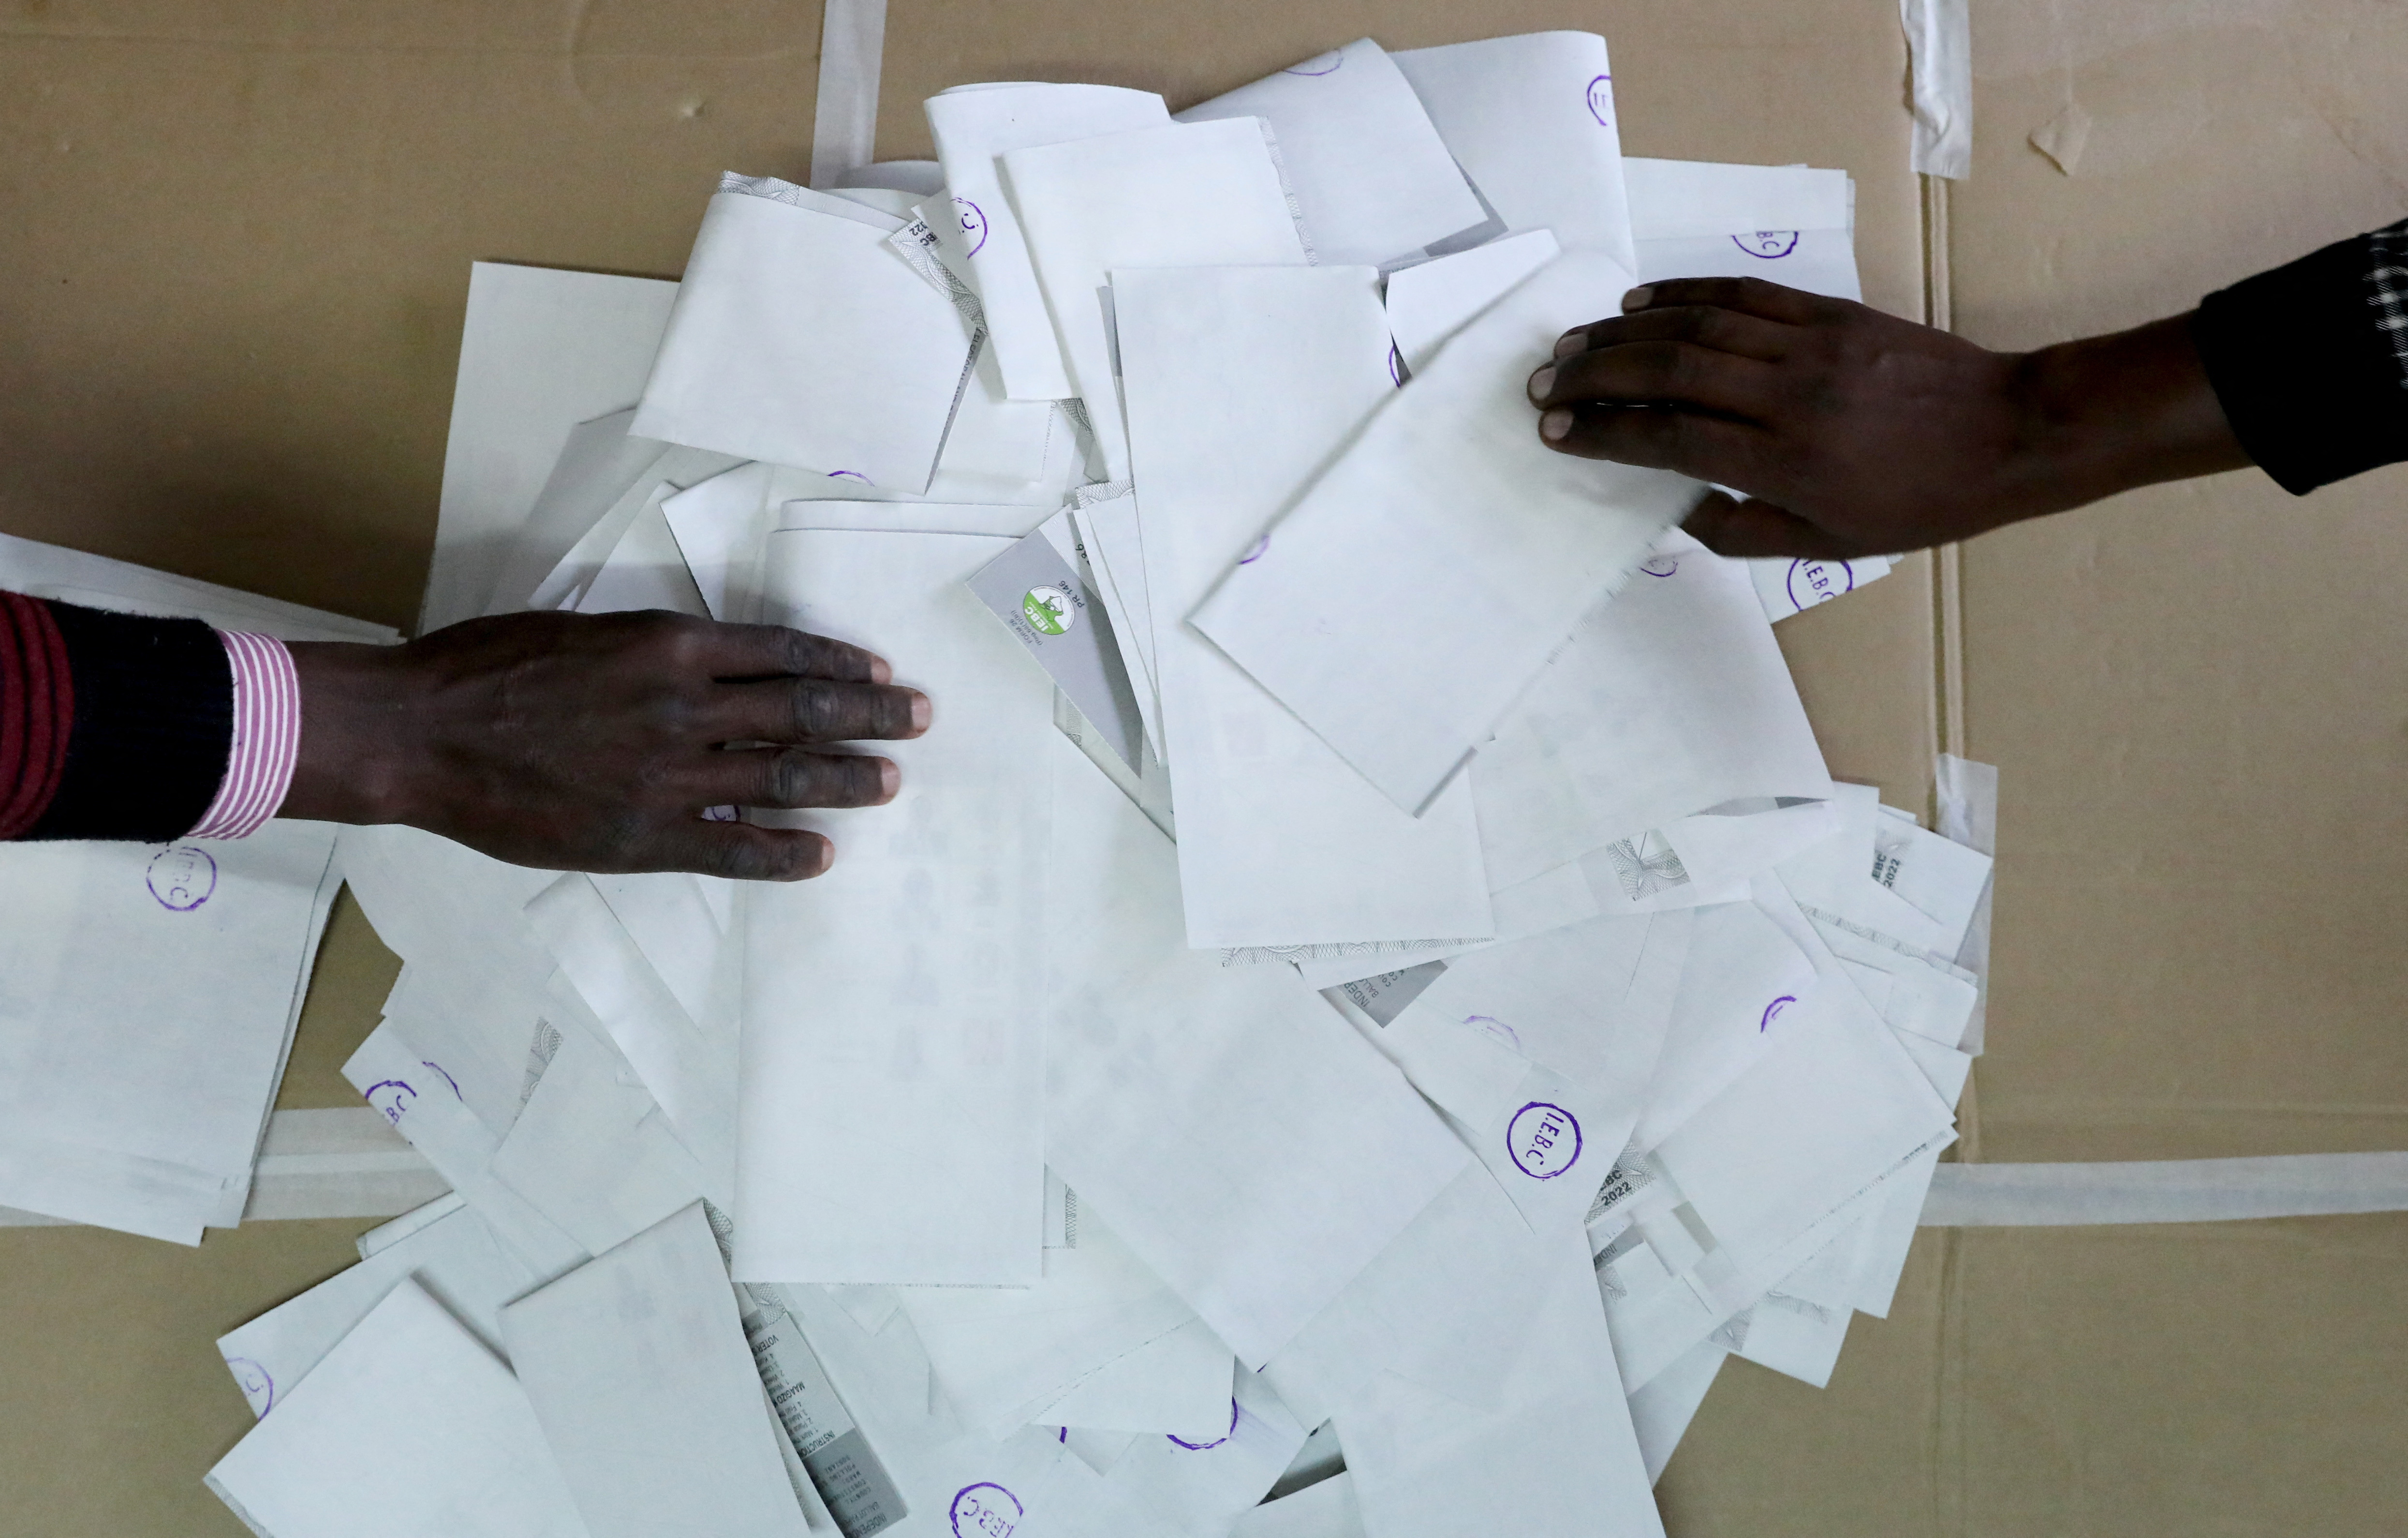 Kenyan general elections, in Eldoret